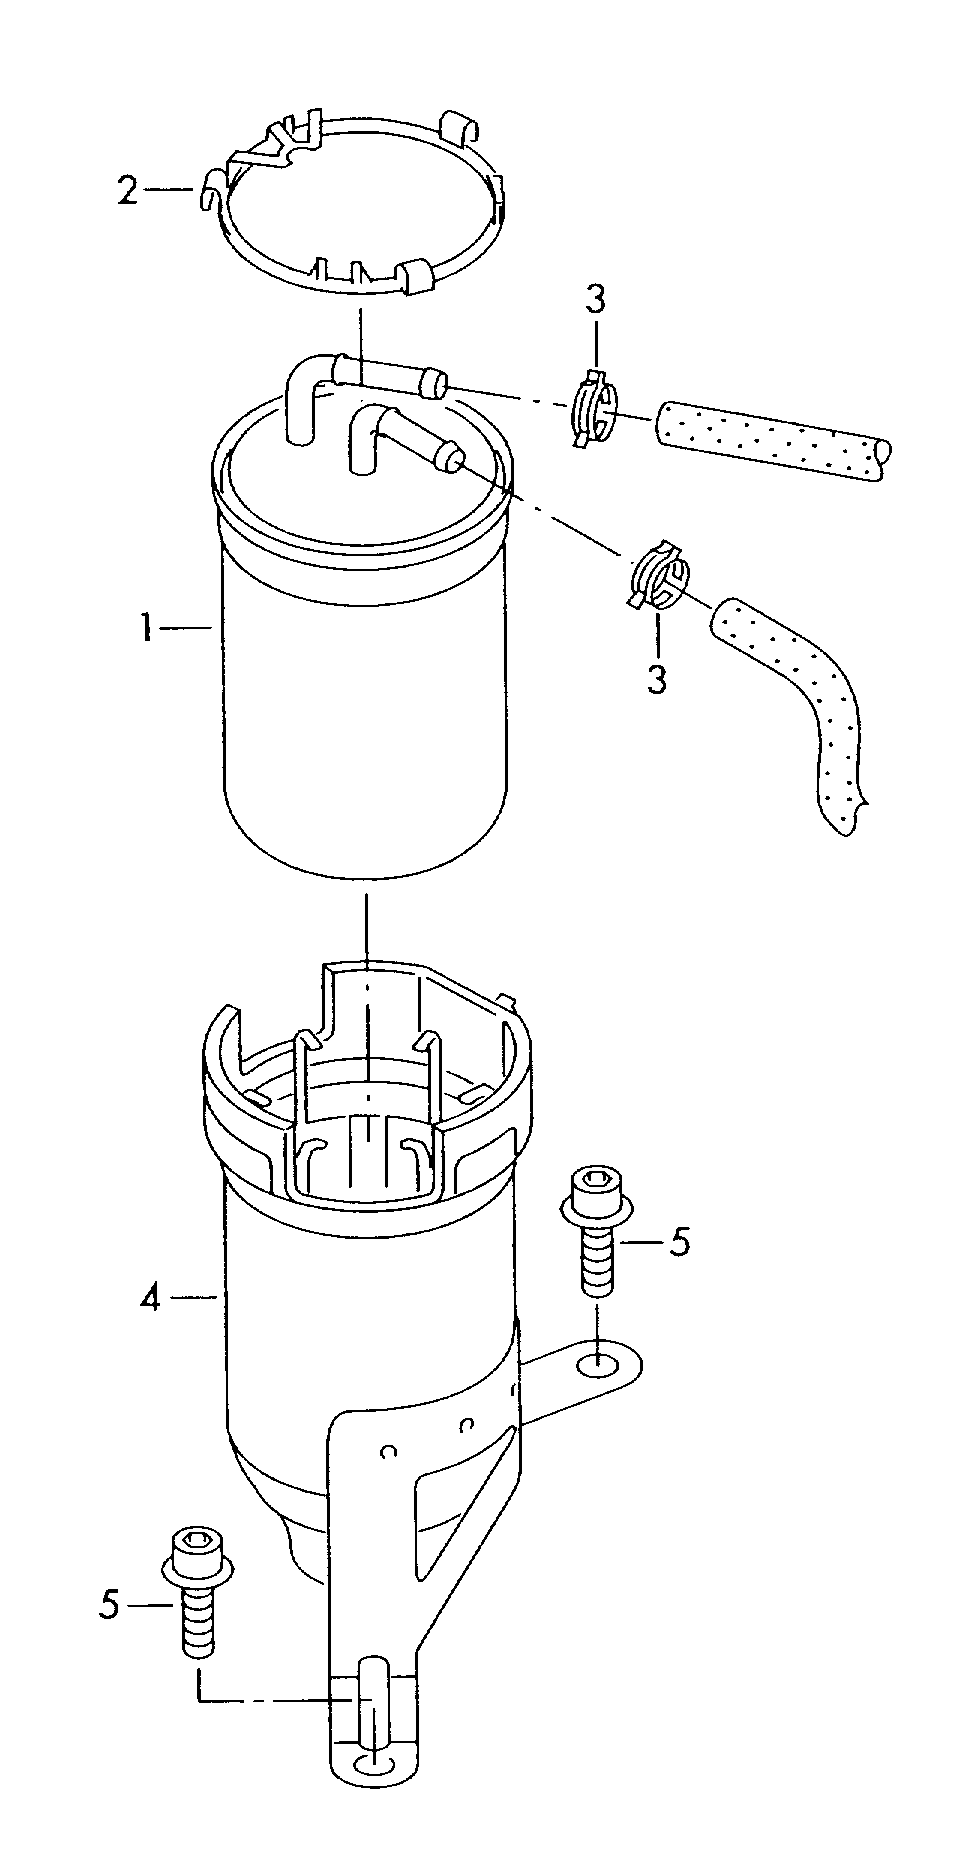 Fuel filter 1.4ltr. - Polo/Derby/Vento-IND - po